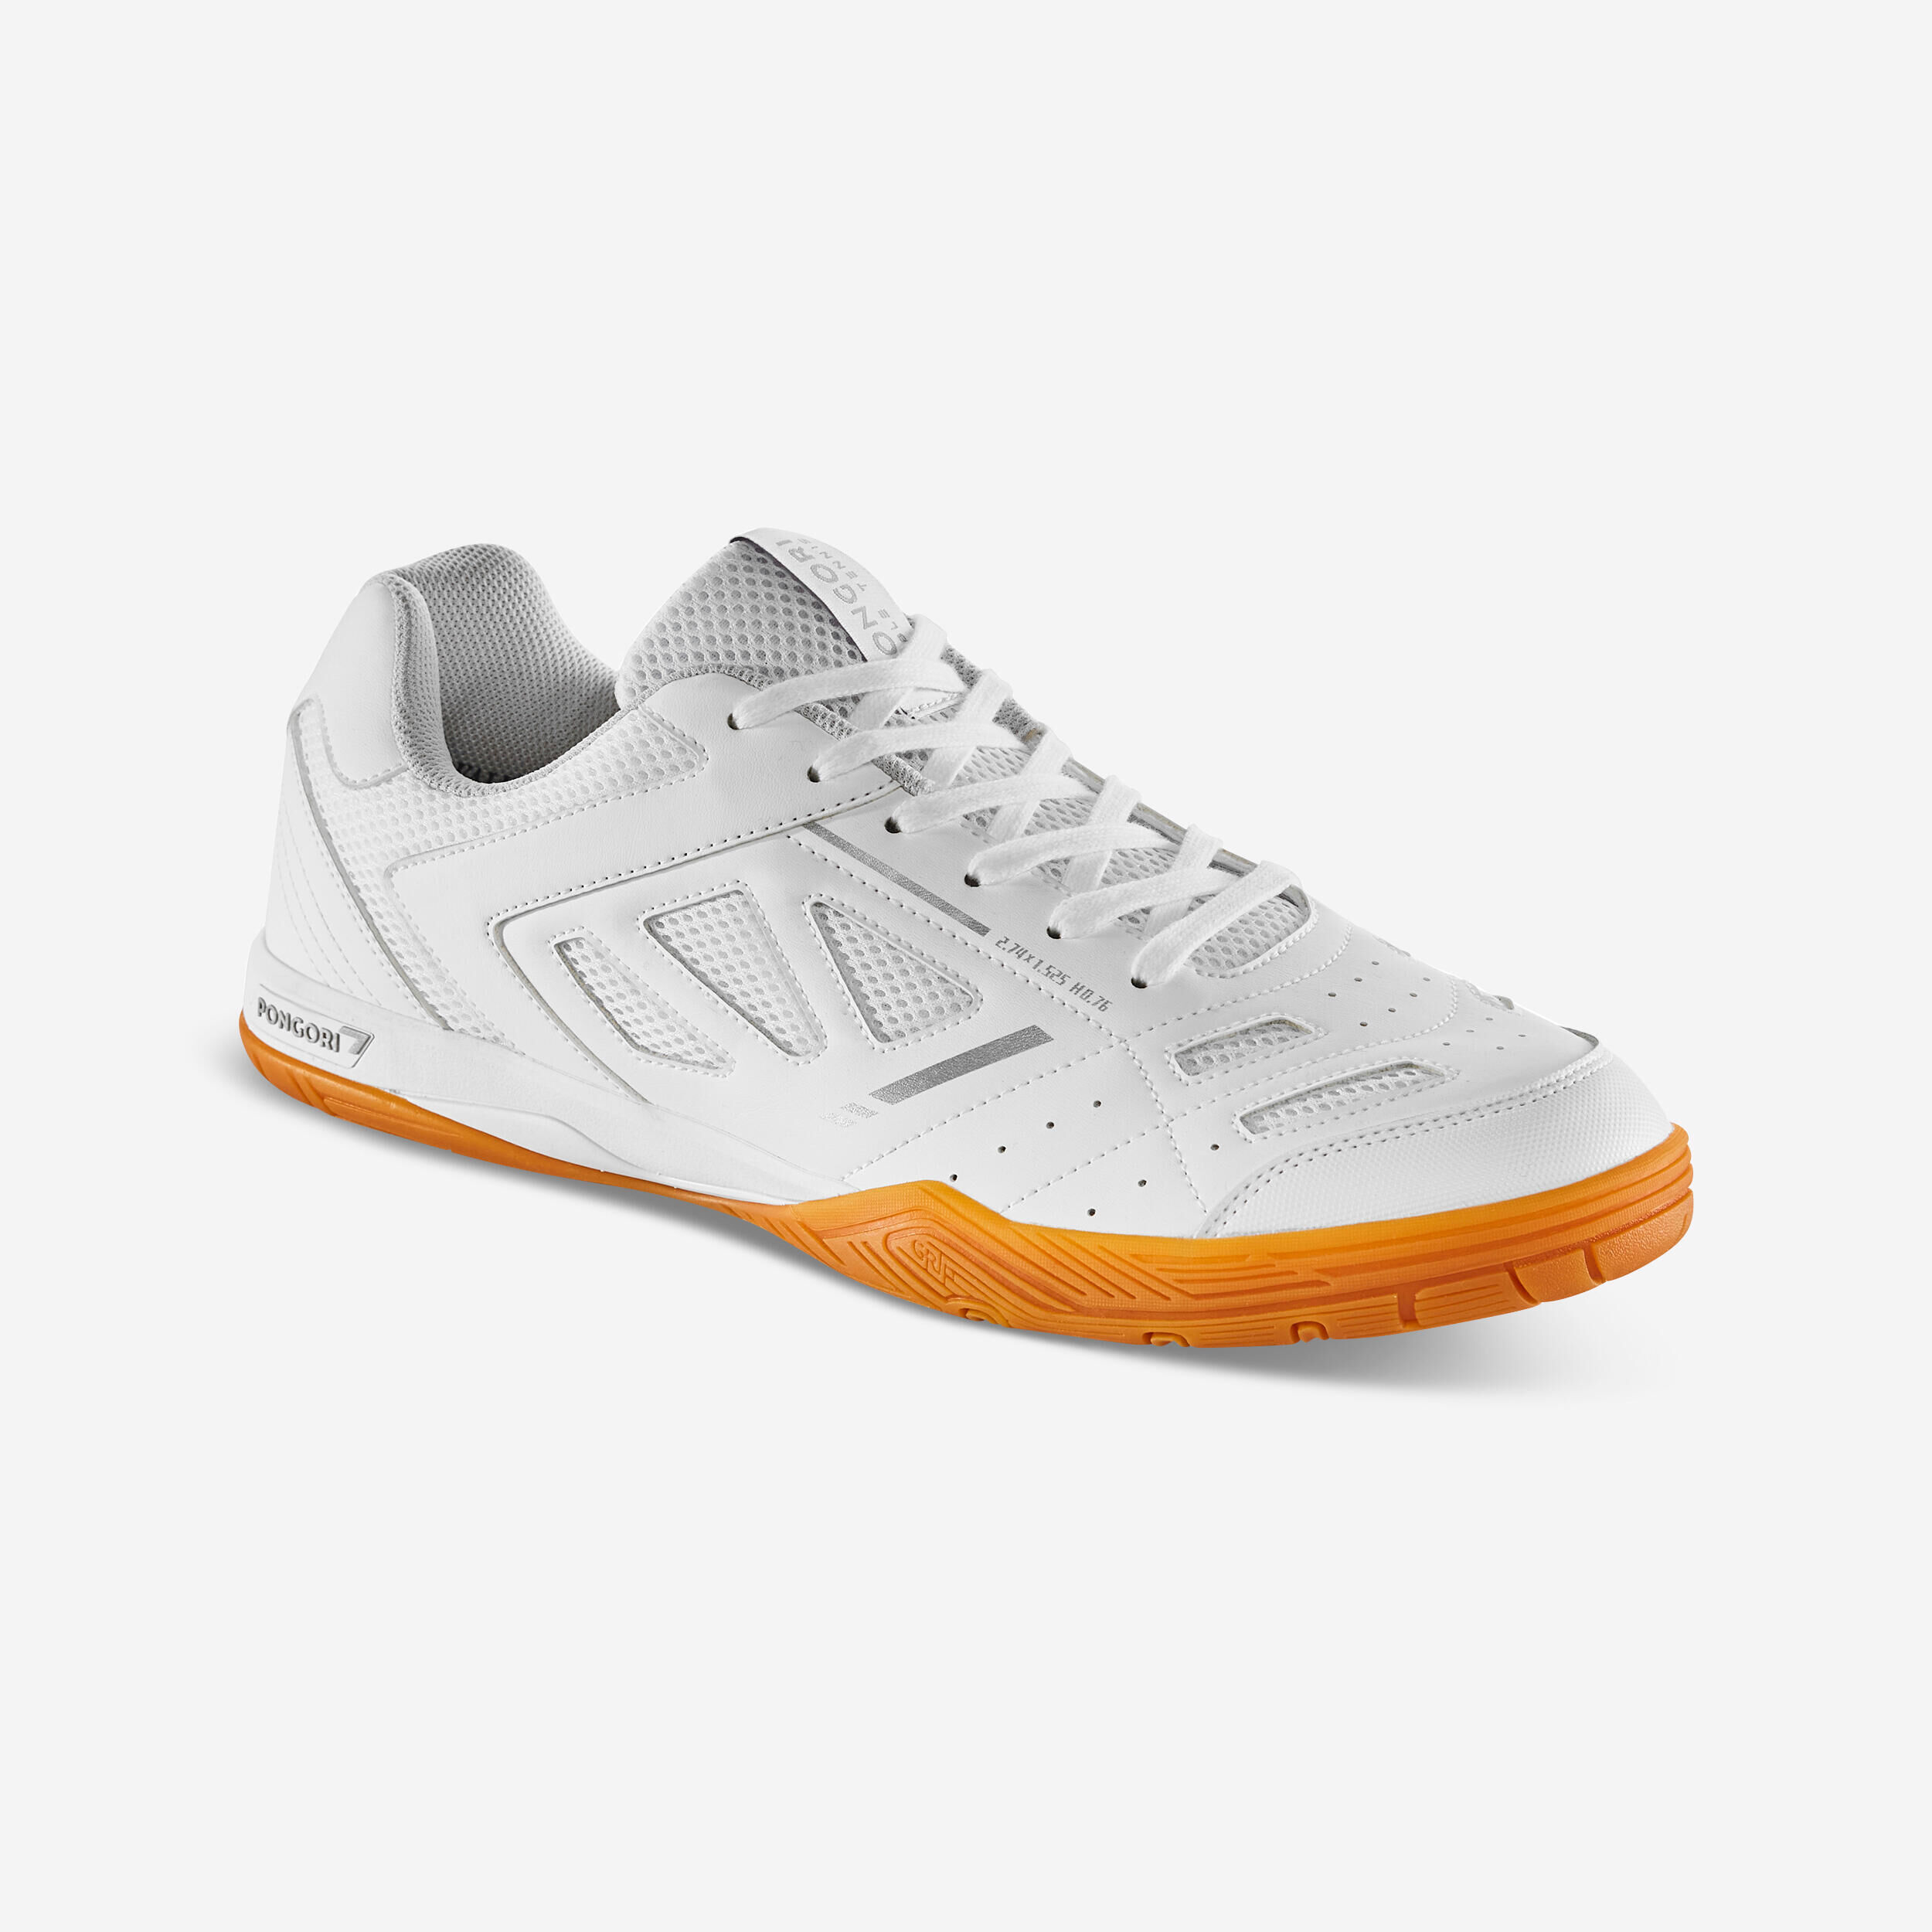 PONGORI Table Tennis Shoes TTS 500 New - White/Silver